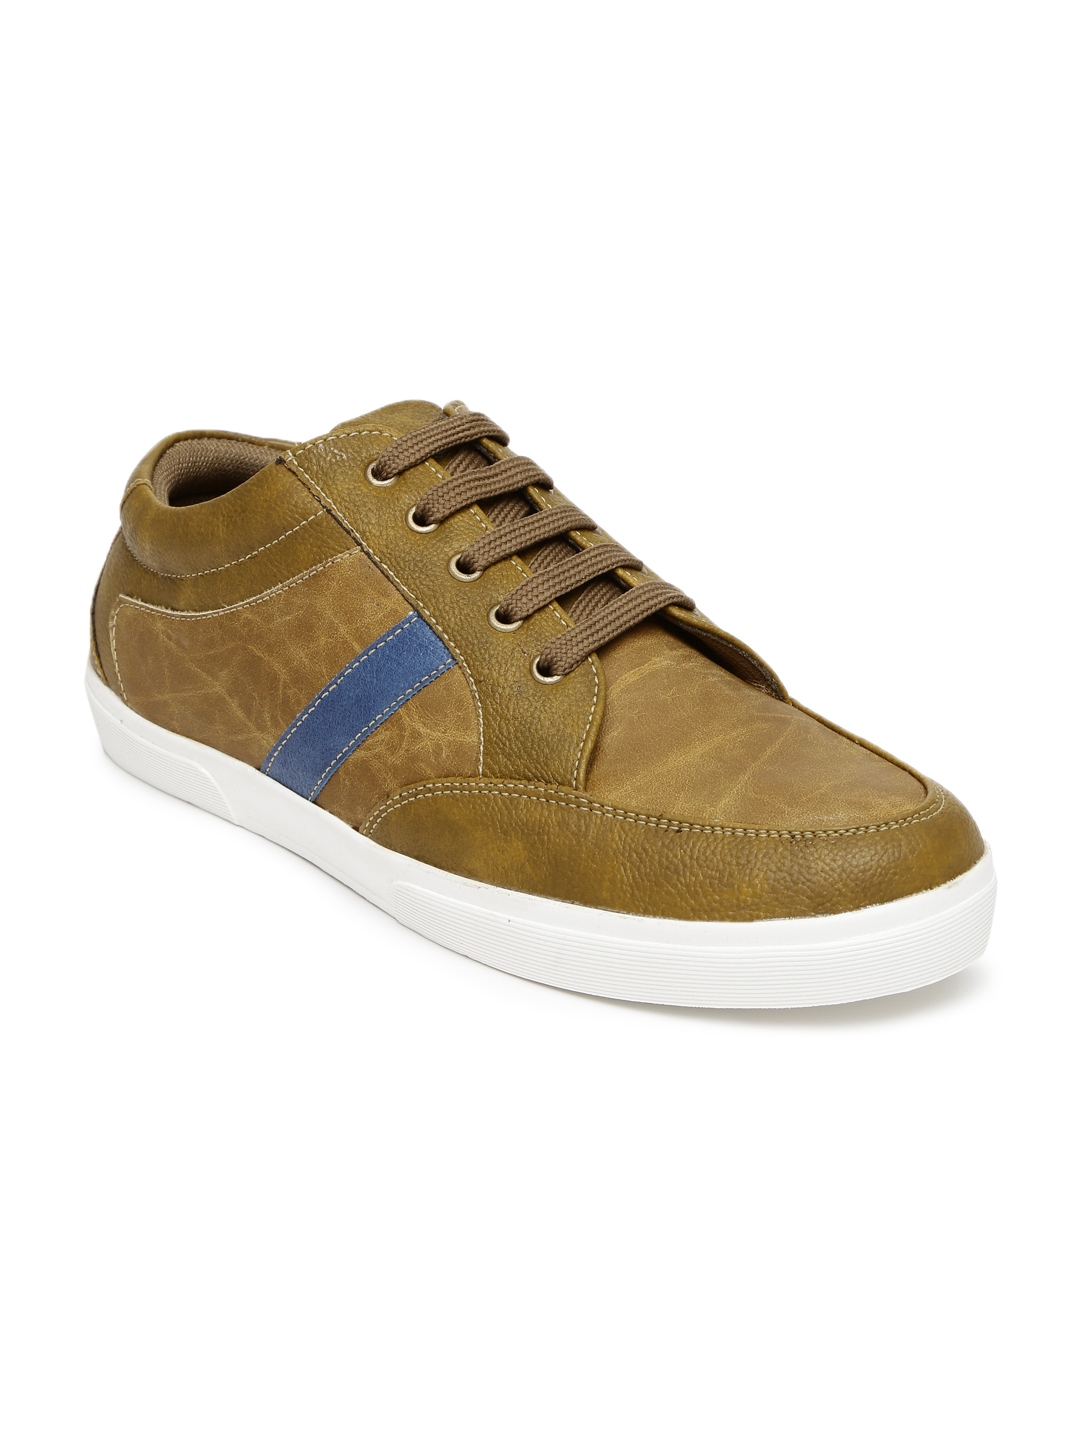 Buy Giorgio Men Tan Brown Sneakers - Casual Shoes for Men 1396763 | Myntra